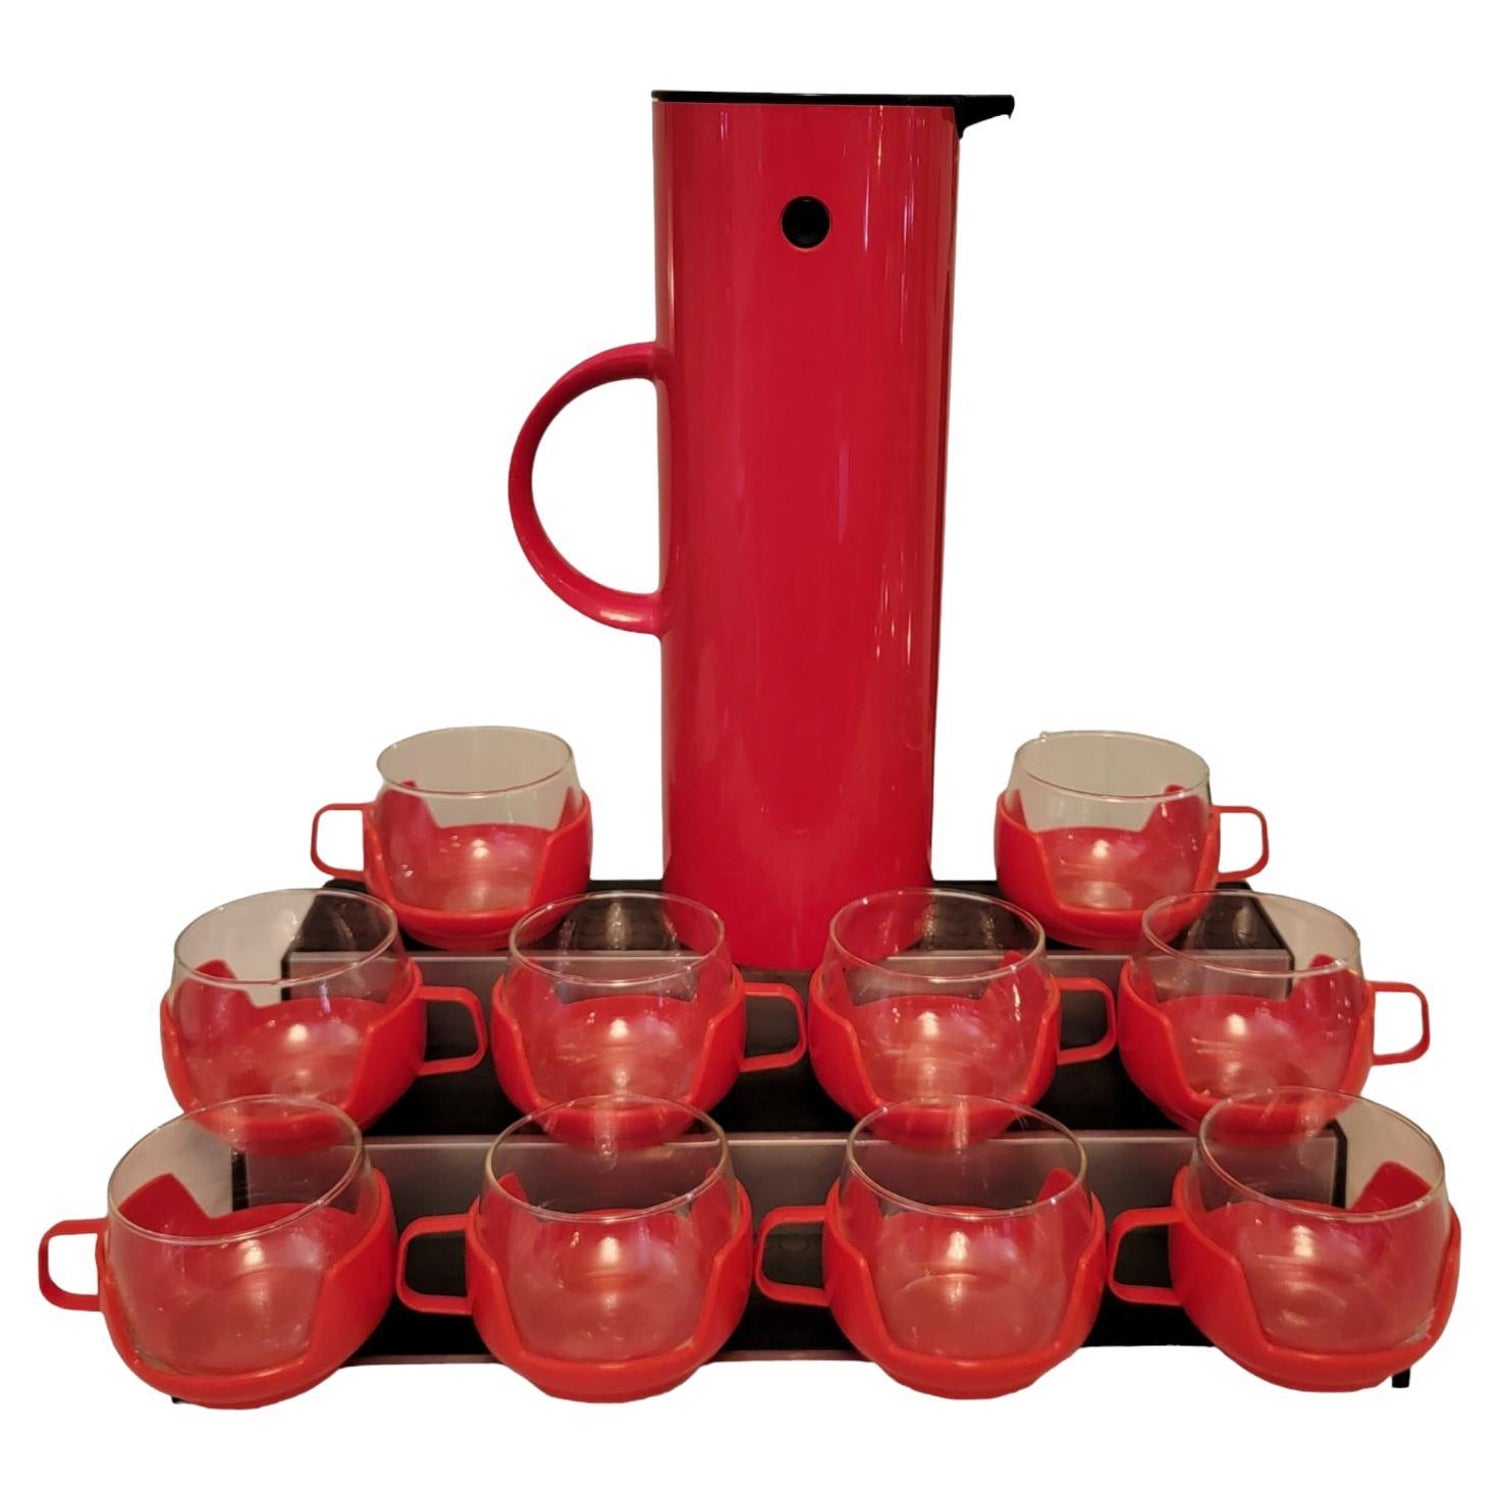 Set of 3 Danesco Bodum Coffee Cups, White Ceramic With Red Logos //  Scandinavian Danish Modern Design Drinkware 